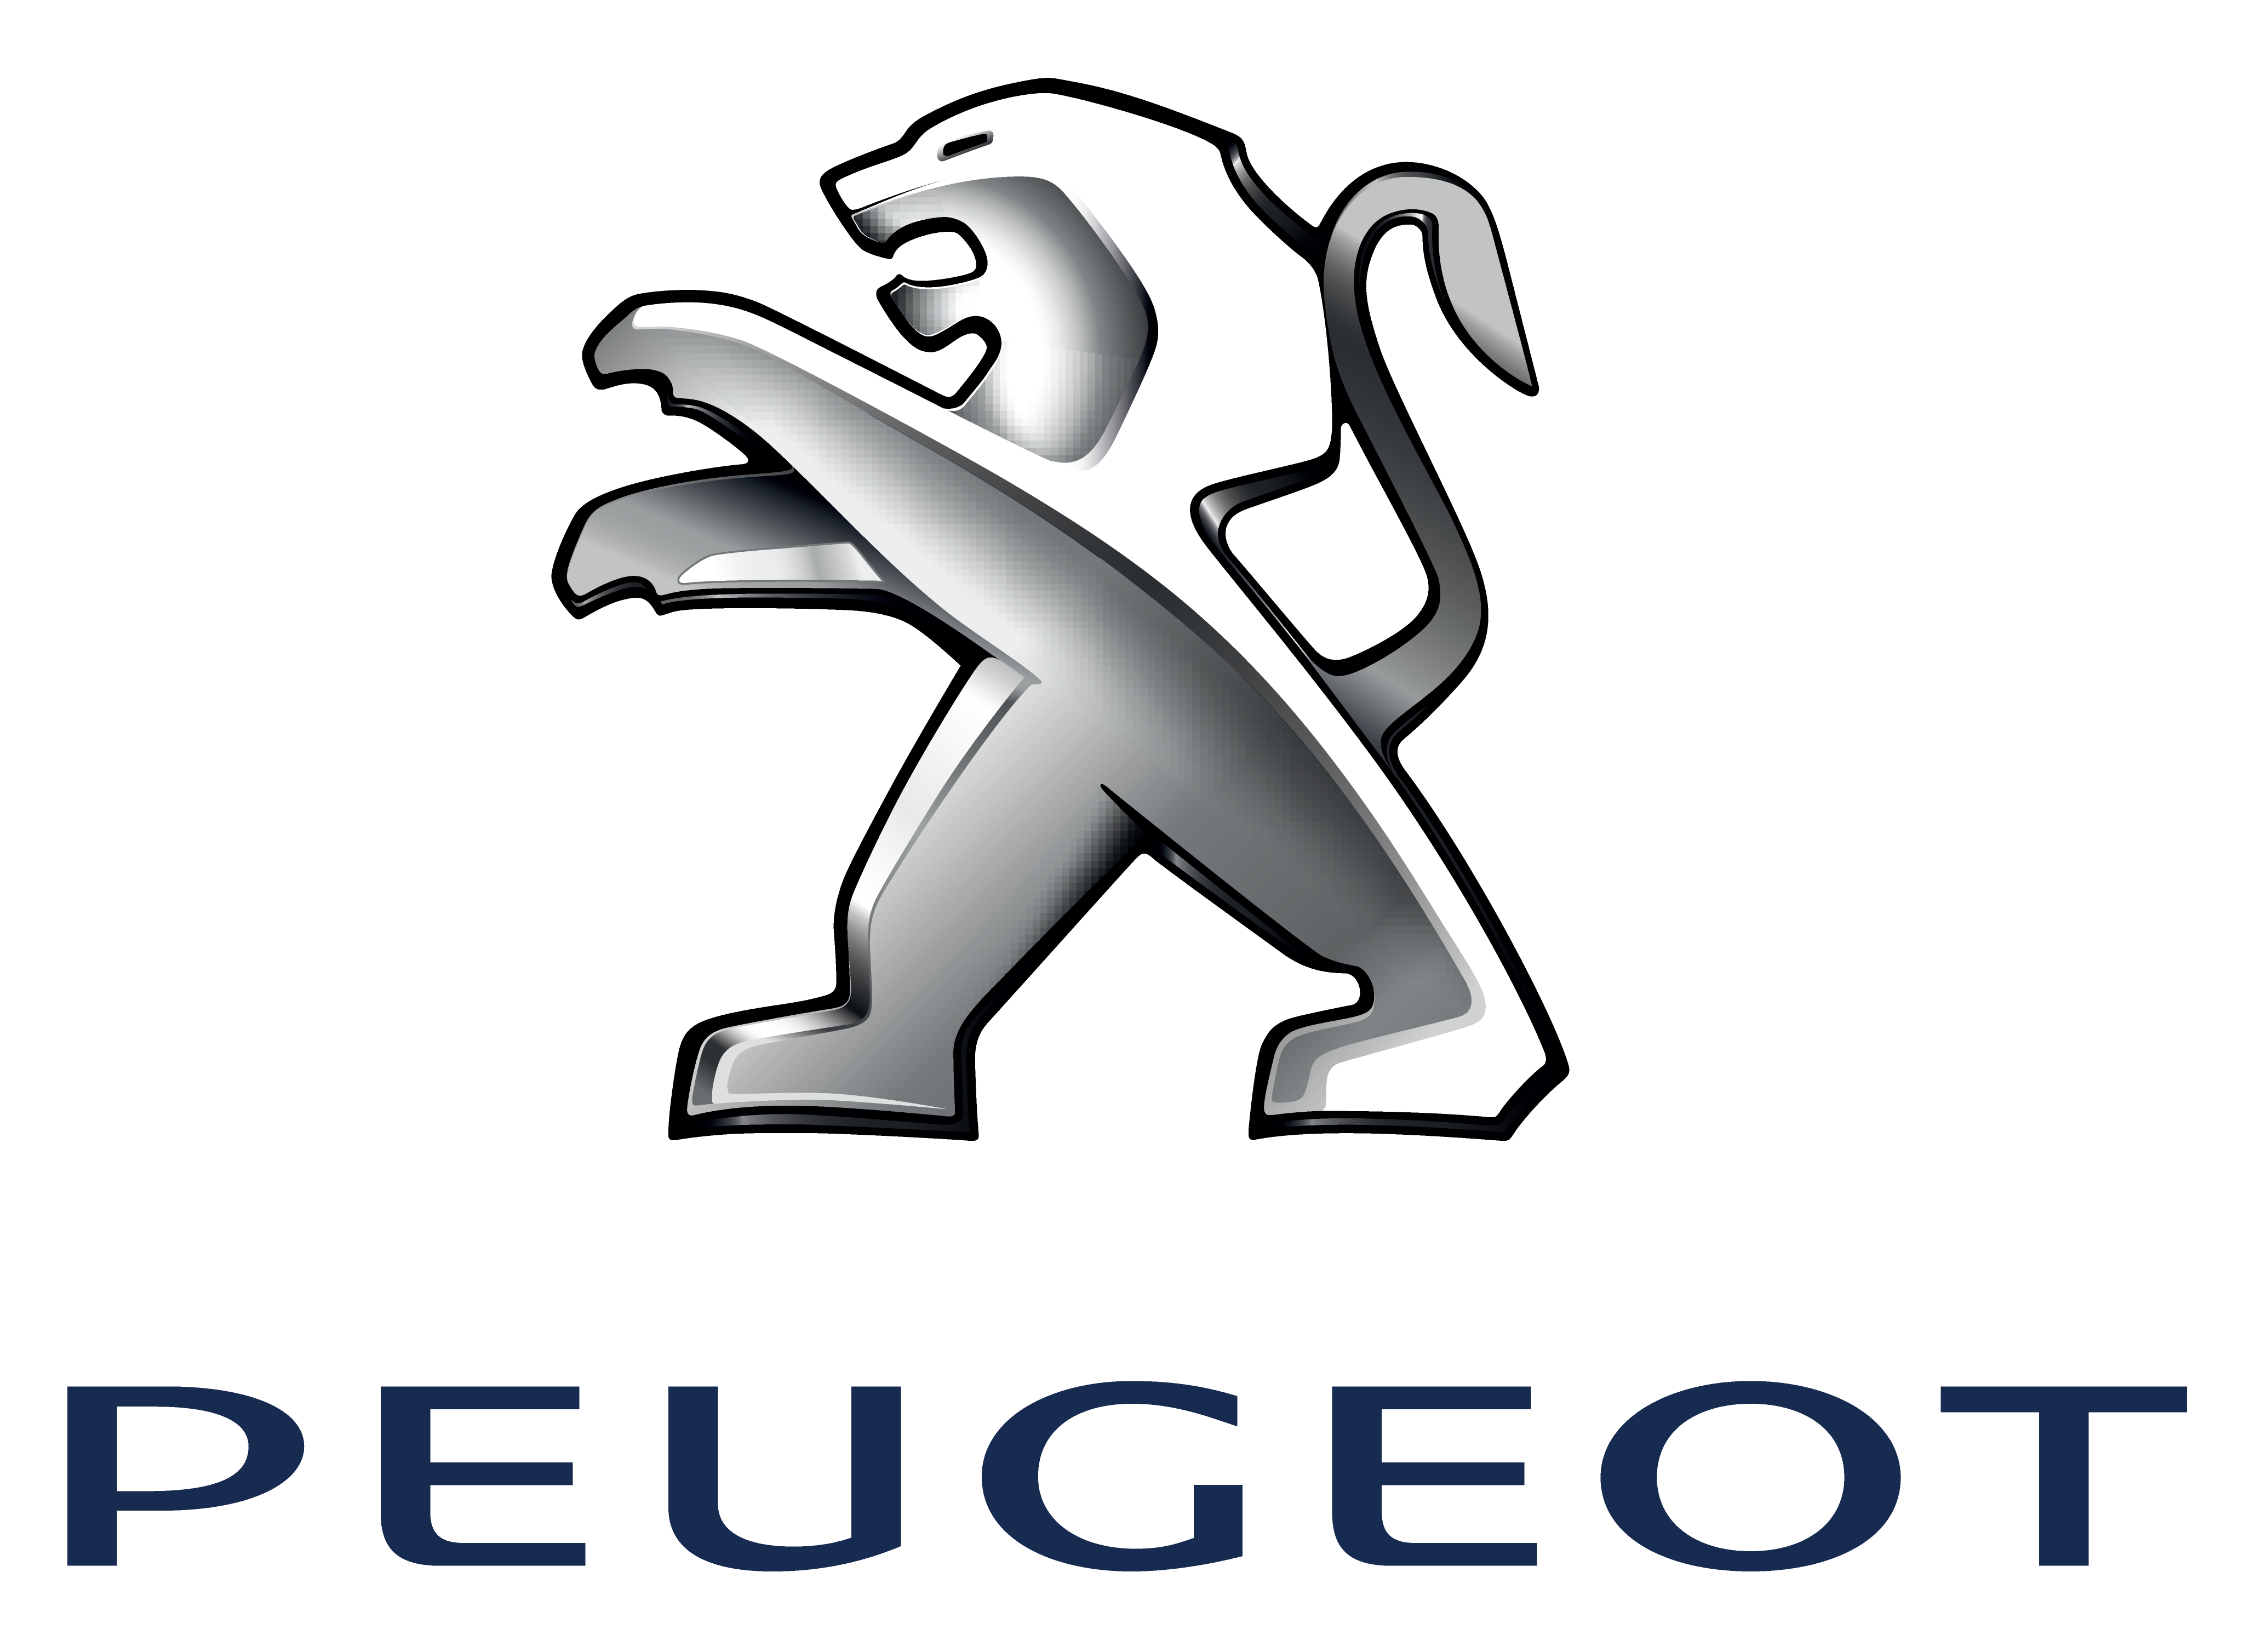 Peugeot Logo Png Image | Car 